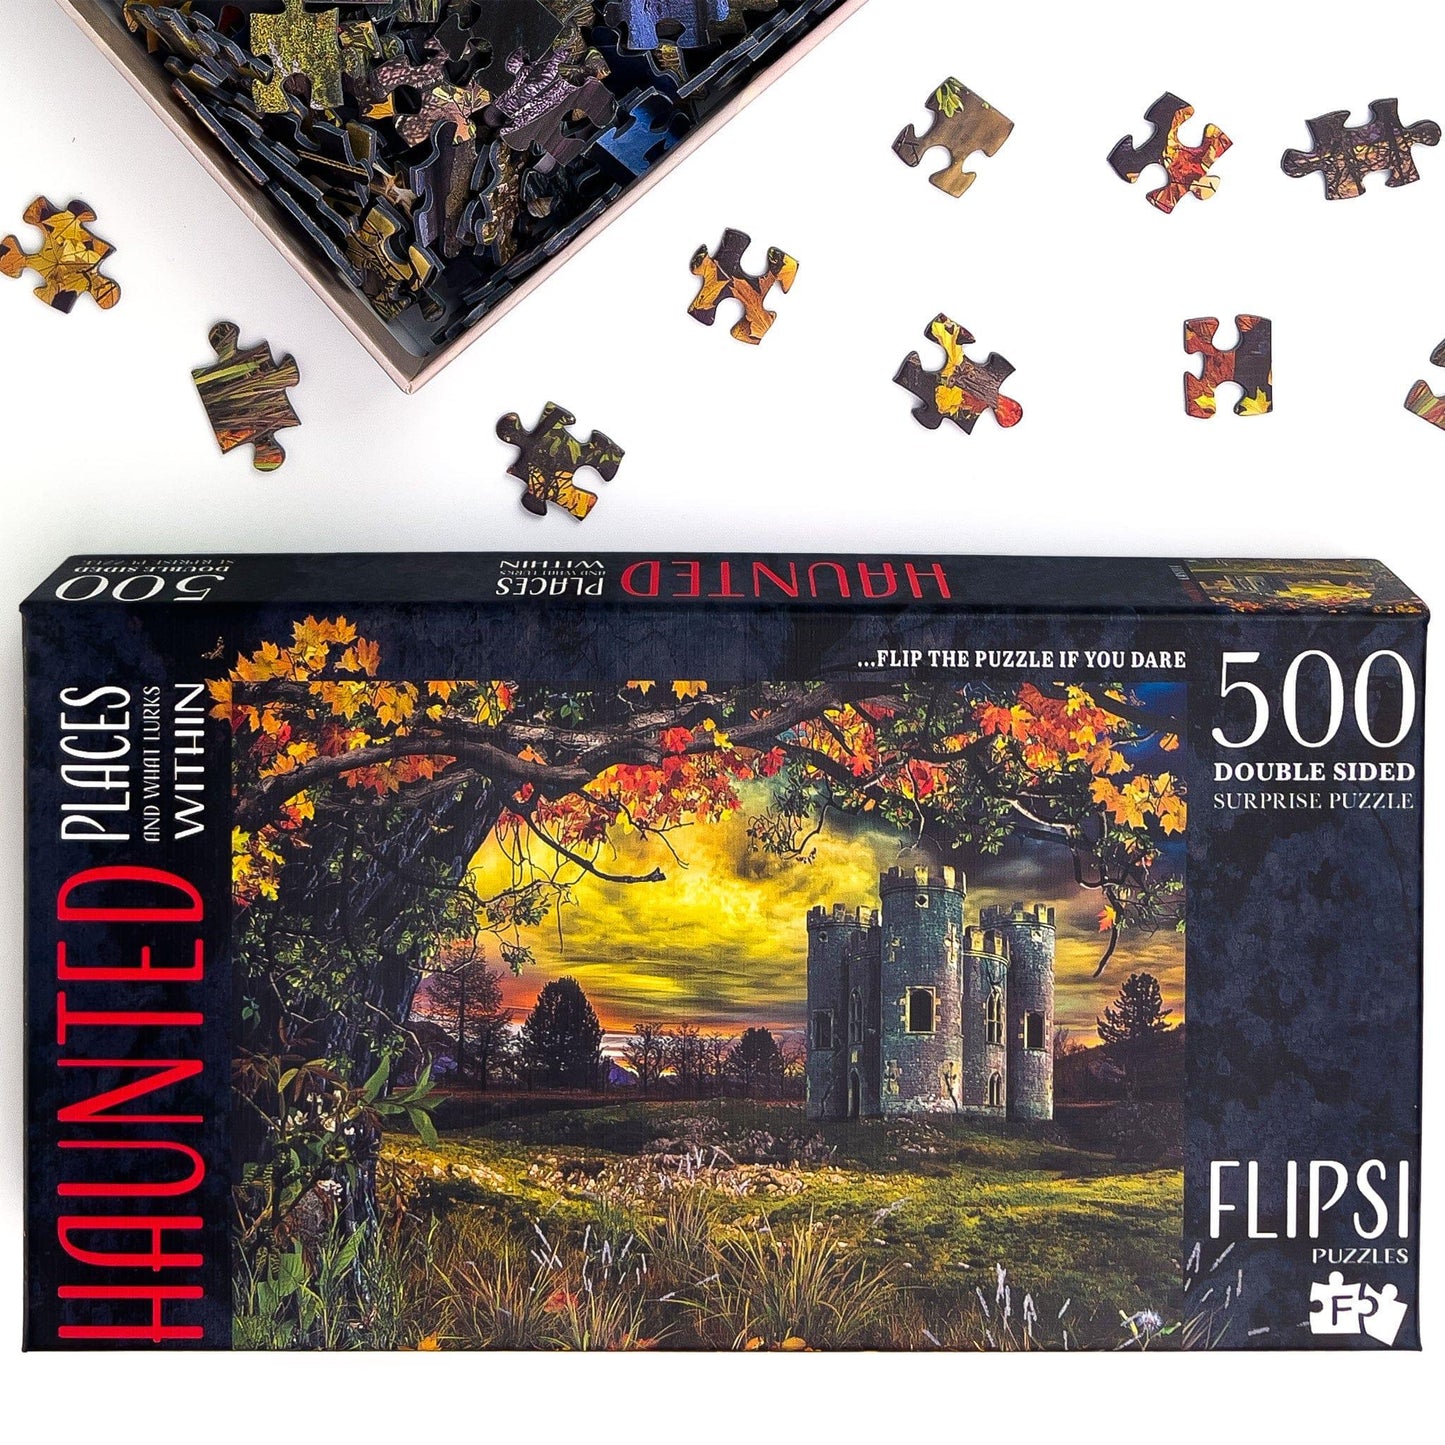 FLIPSI PUZZLE: Haunted Castle Puzzle Box and Puzzle Pieces